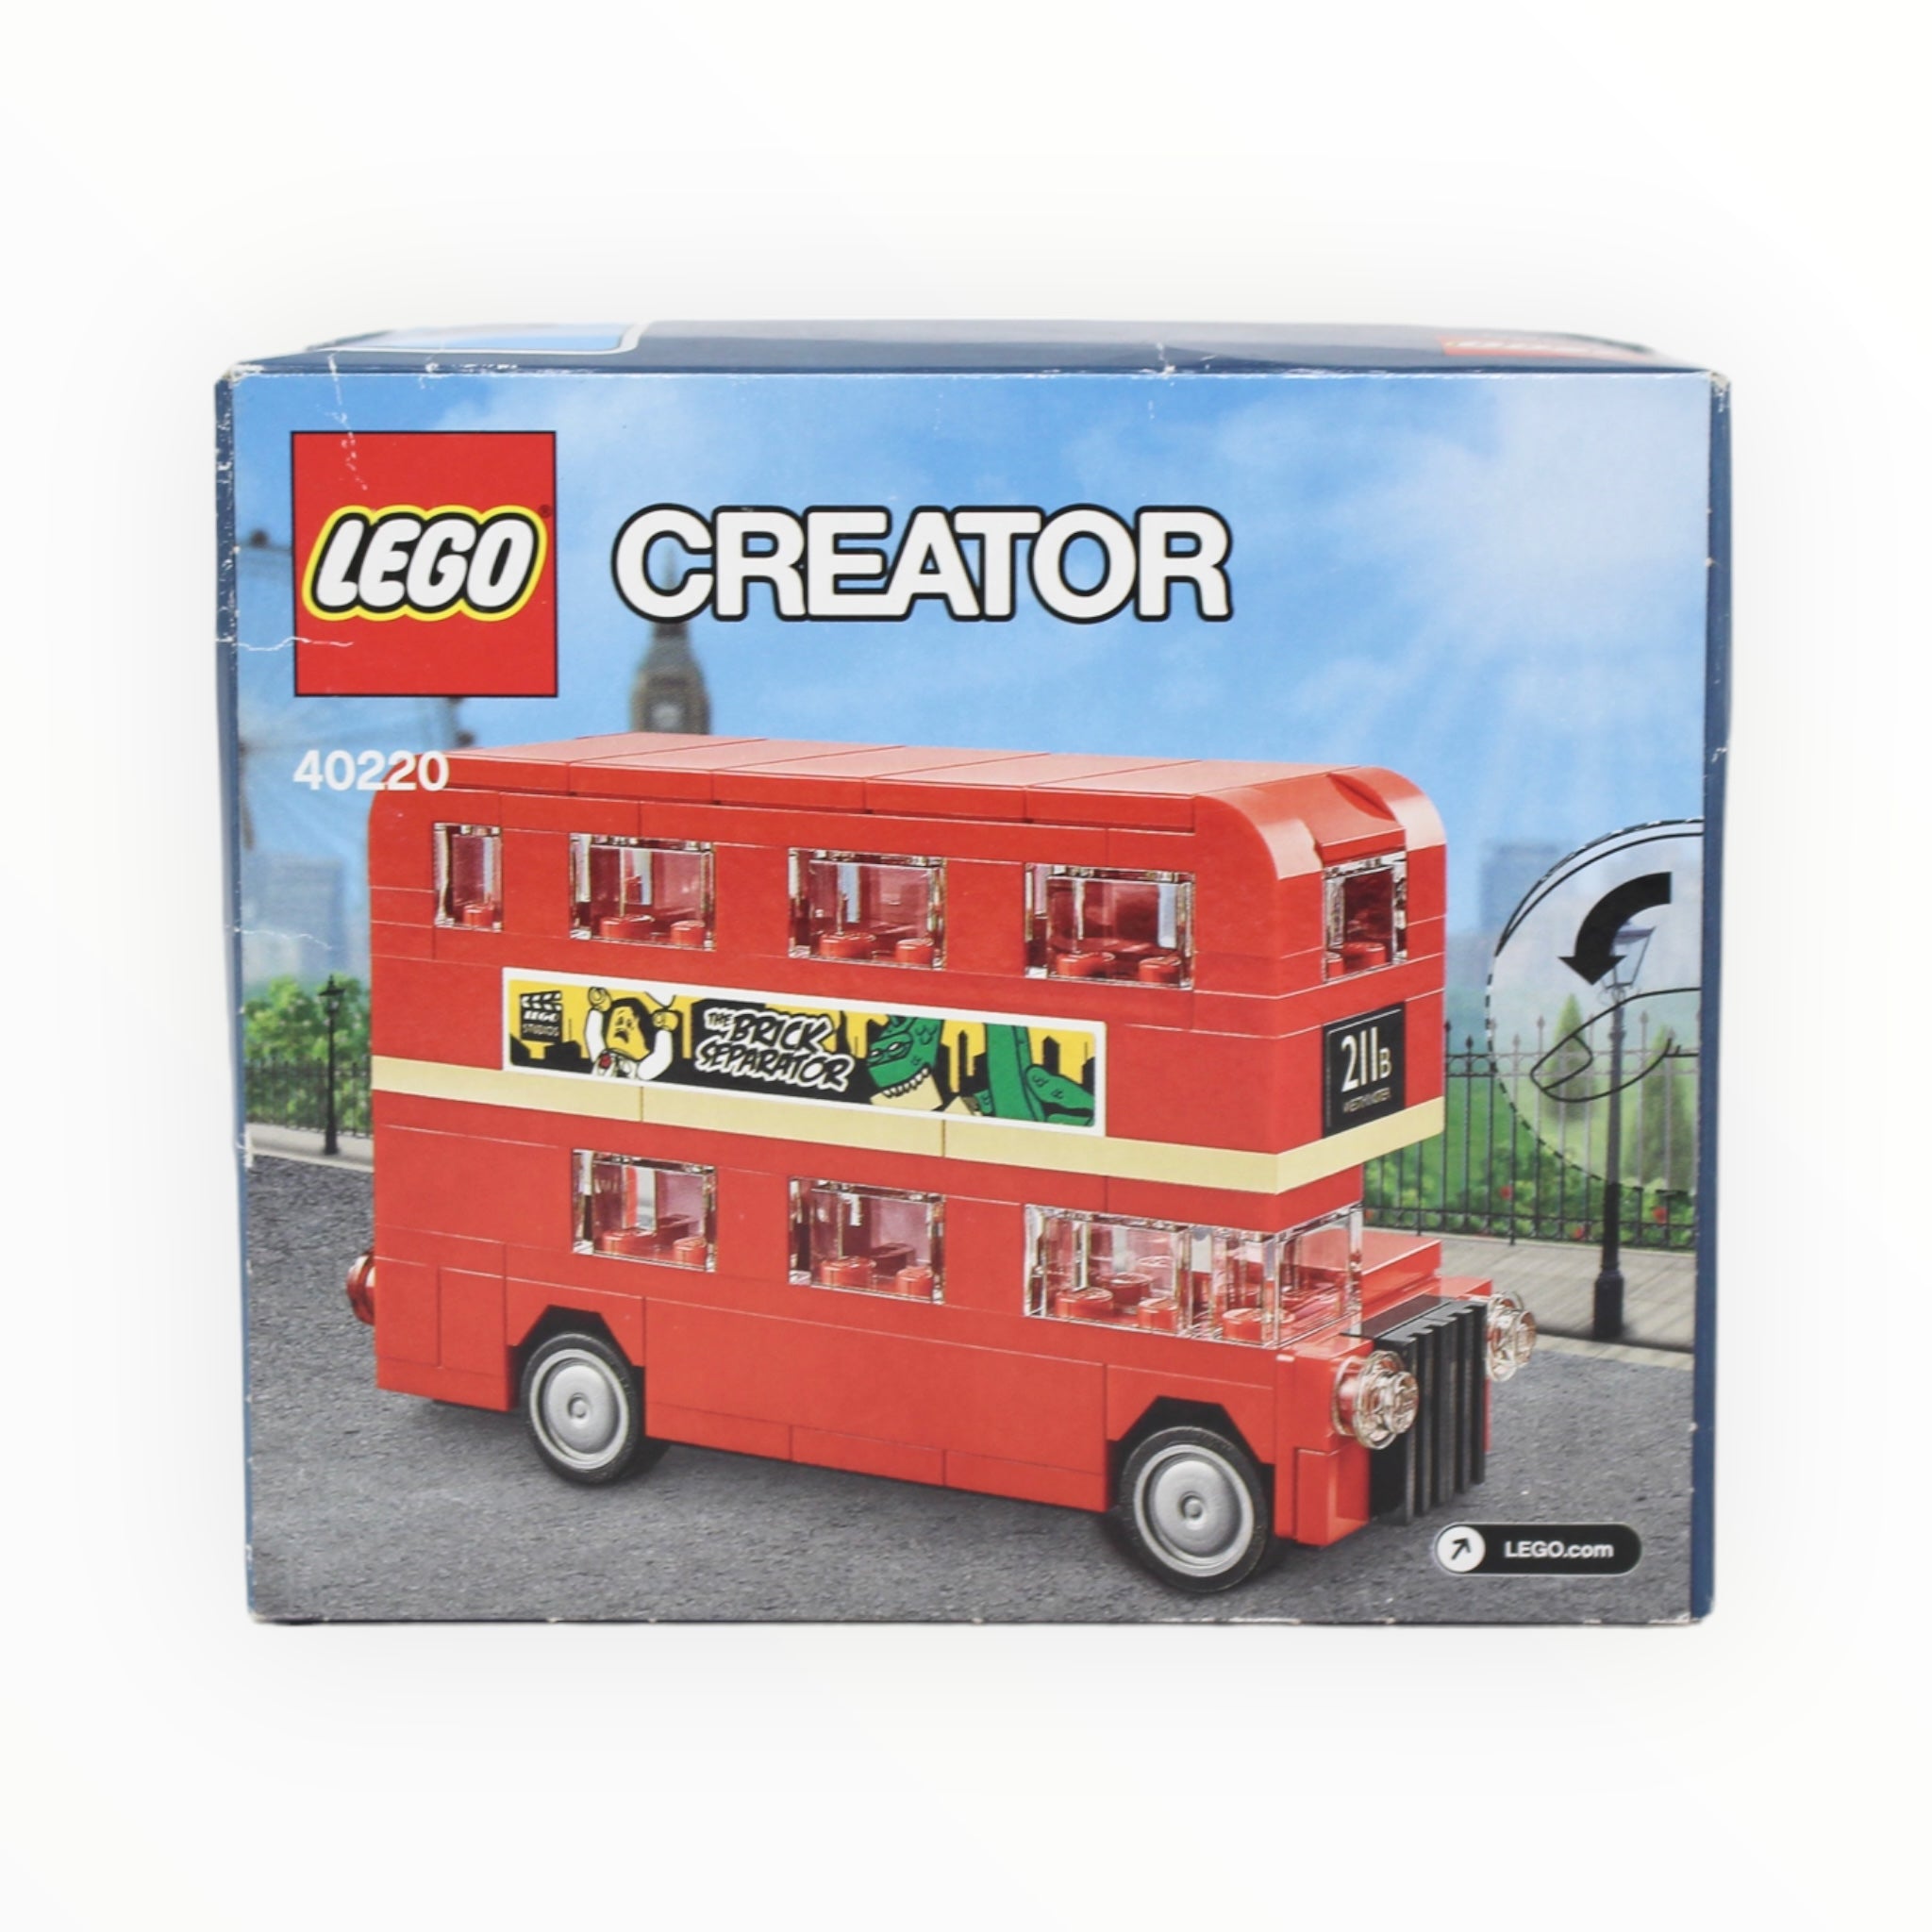 Retired Set 40220 Creator Mini London Bus (European box)